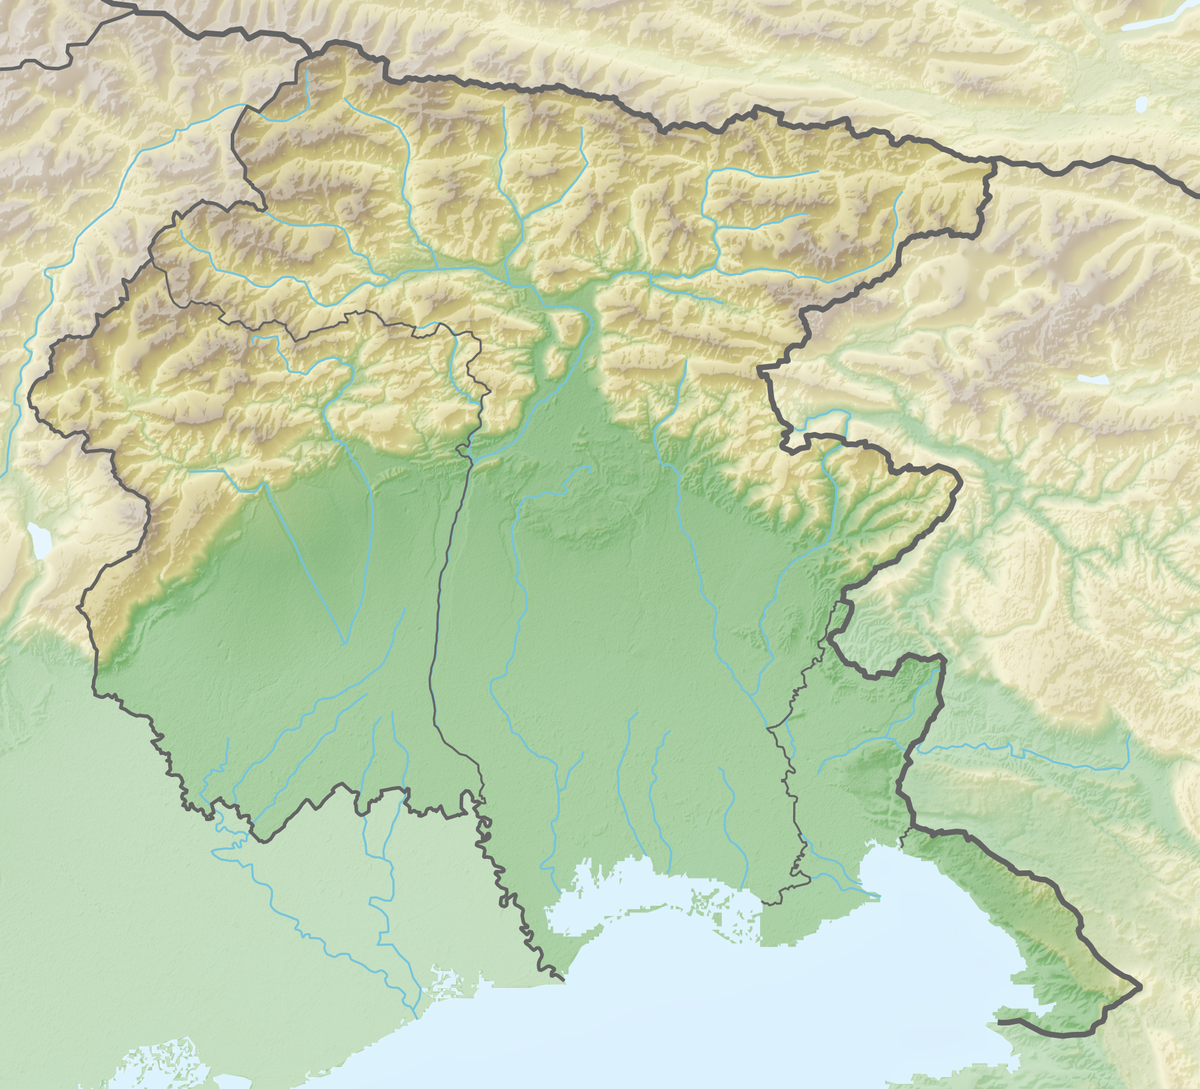 Noclador/sandbox/Italian Army 1989 units map is located in Friuli-Venezia Giulia